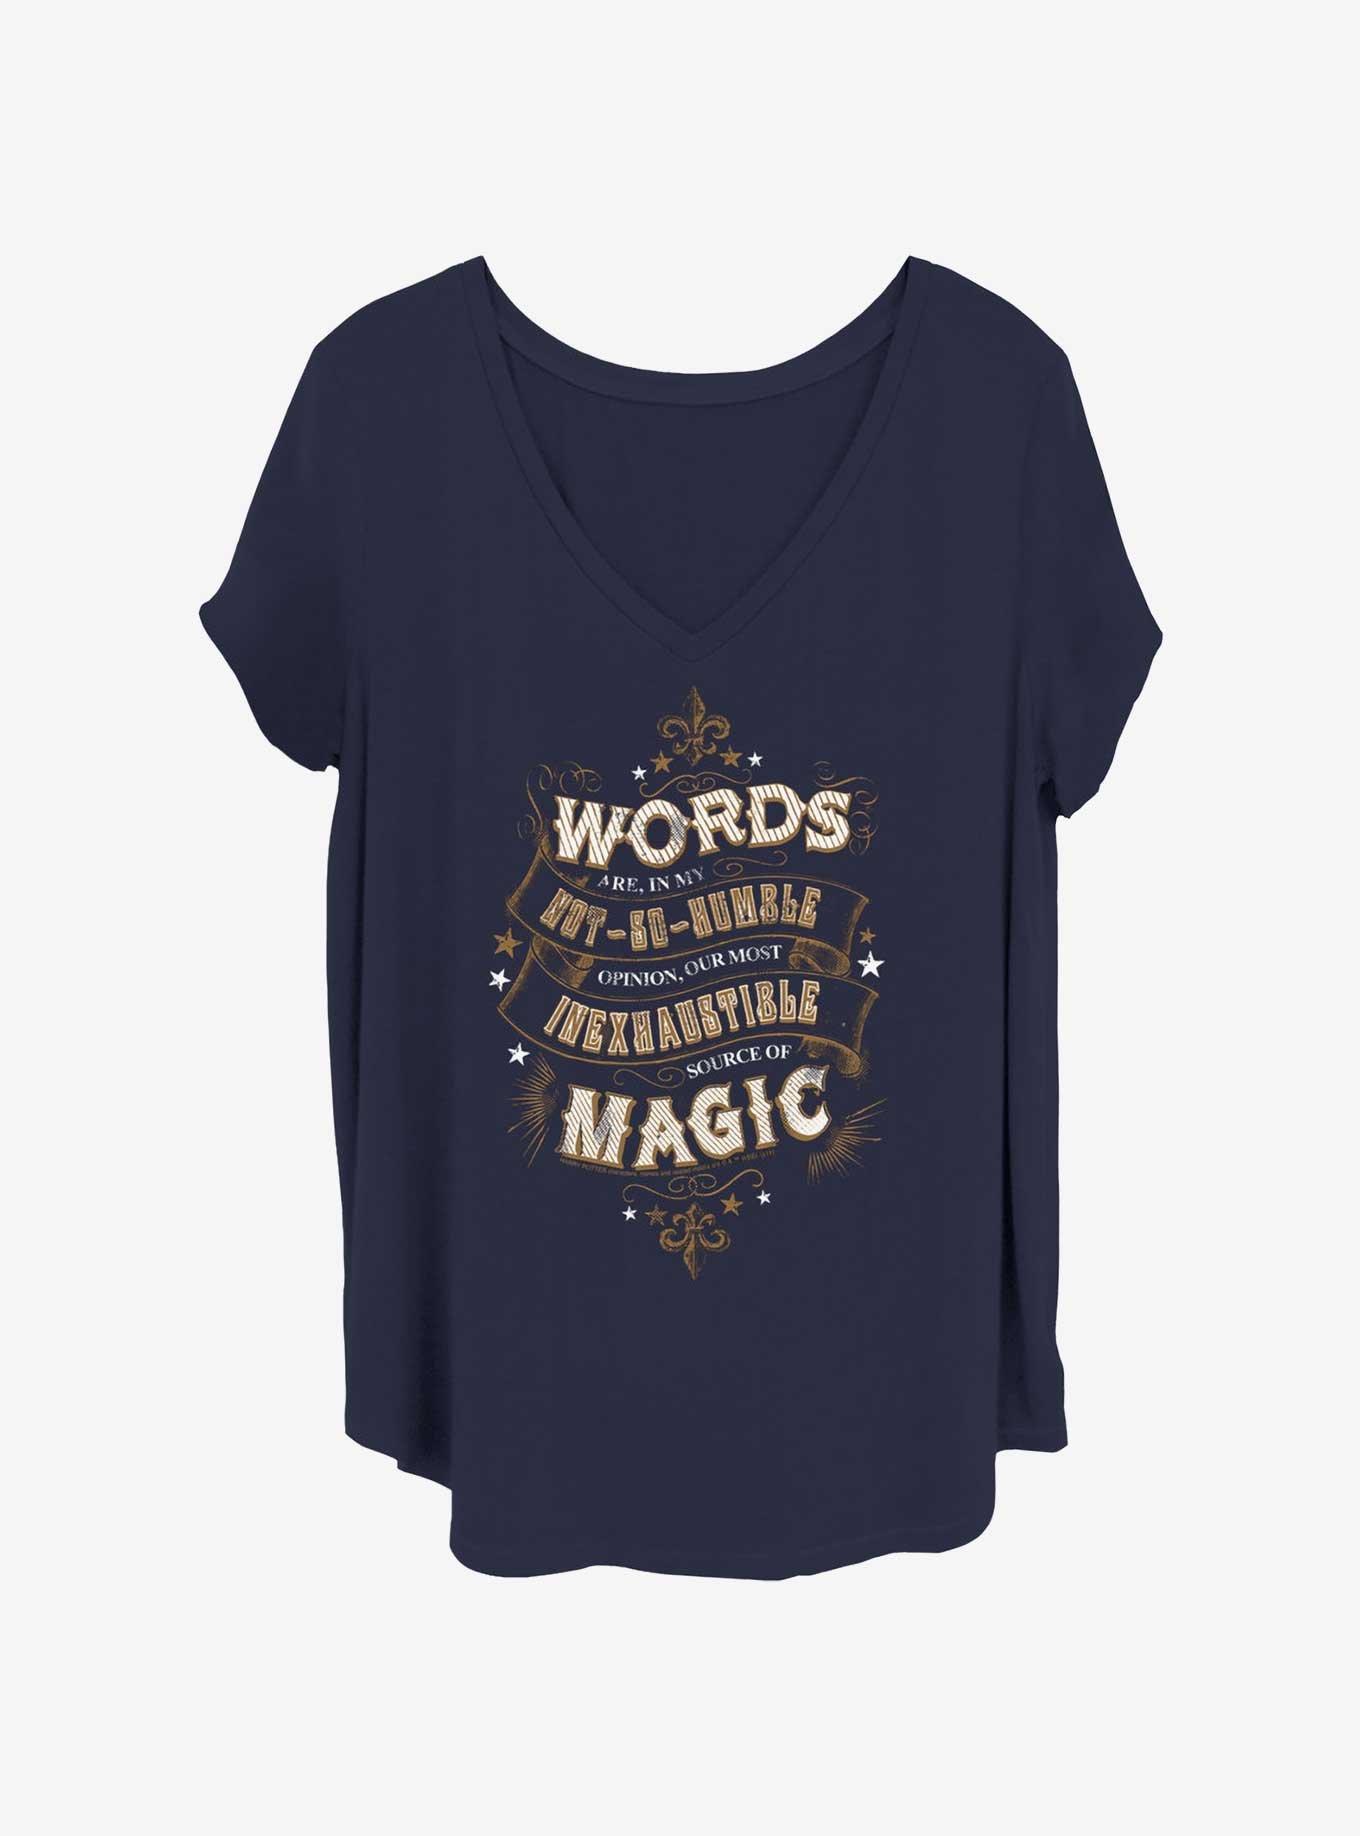 Harry Potter Humble Words Girls T-Shirt Plus